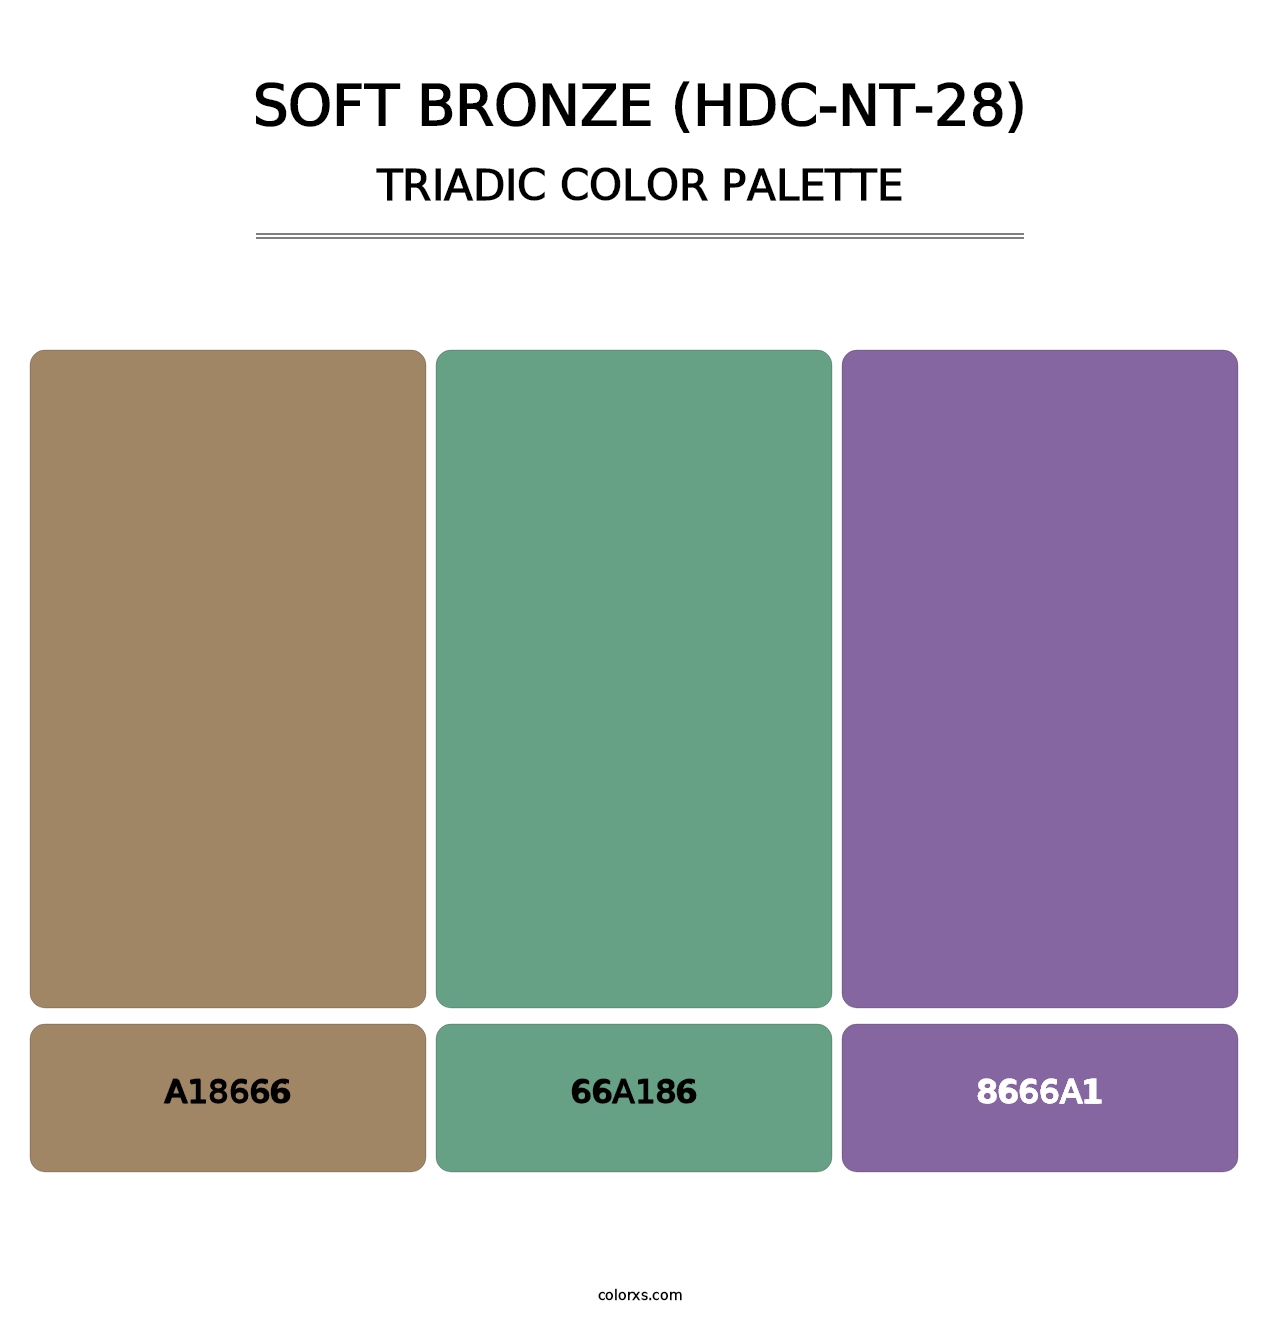 Soft Bronze (HDC-NT-28) - Triadic Color Palette